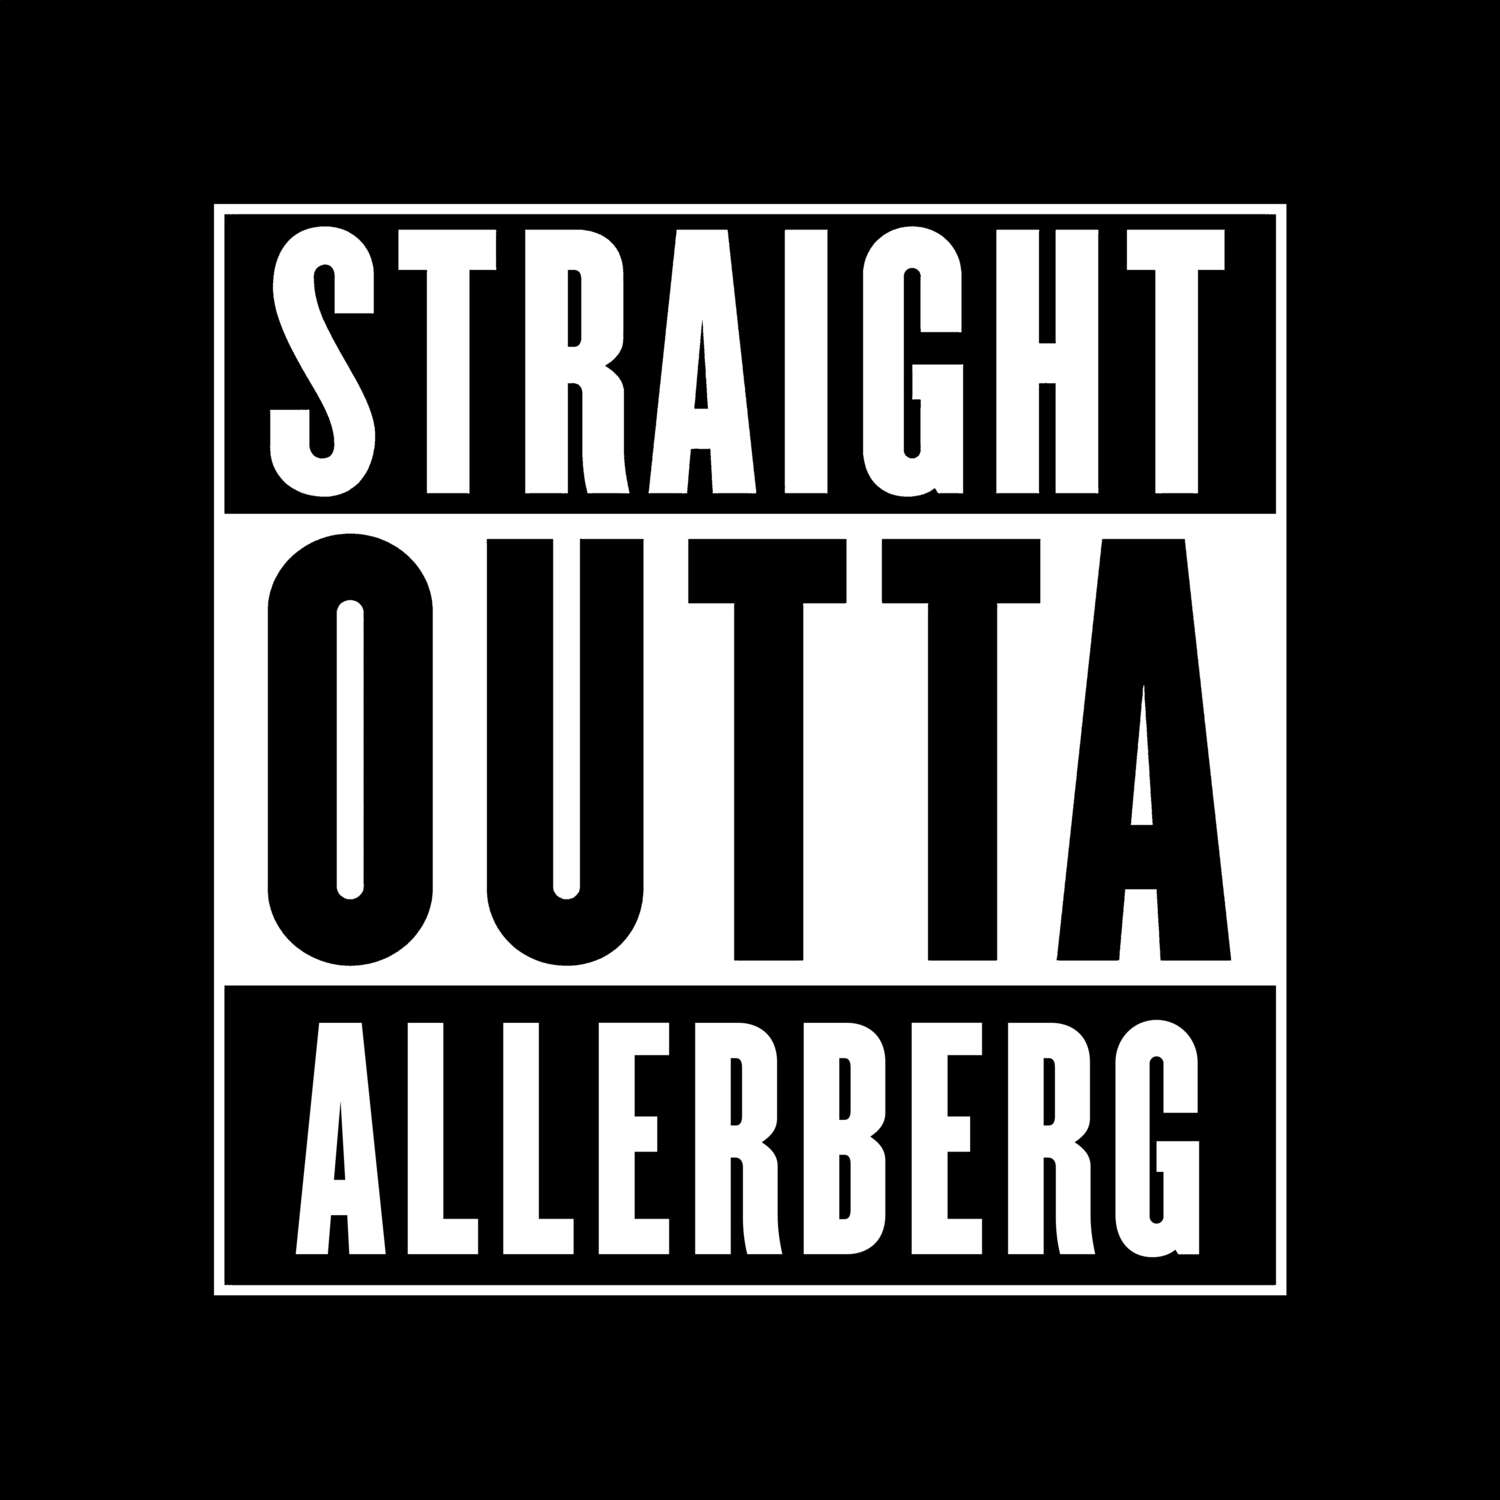 Allerberg T-Shirt »Straight Outta«